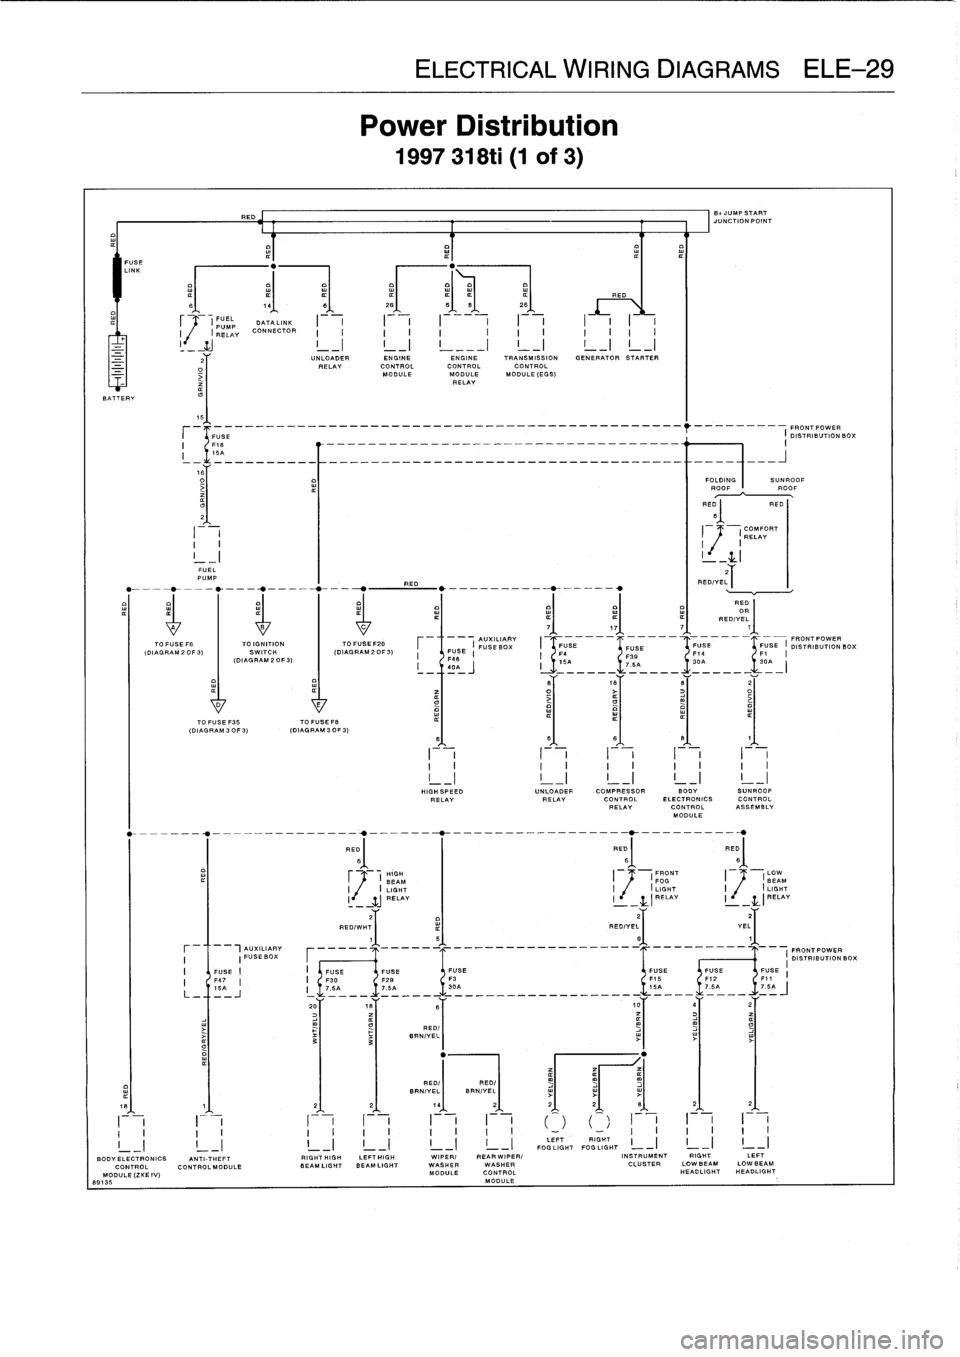 BMW 328i 1997 E36 Service Manual 
FUSE
LINK

I
IRELAY
CONNECTOR
O
-
z
BATTERY

TO
FUSE
F6
(DIAGRAM
2
OF
3)

FUEL
PUMP

I
-
1
I
--
,I

	

I

	

I

	

I
_I
LI
BODY
ELECTRONICS

	

ANTI-THEFT
CONTROL
CONTROLMODULEMODULE
(ZKE
IV)
80135

